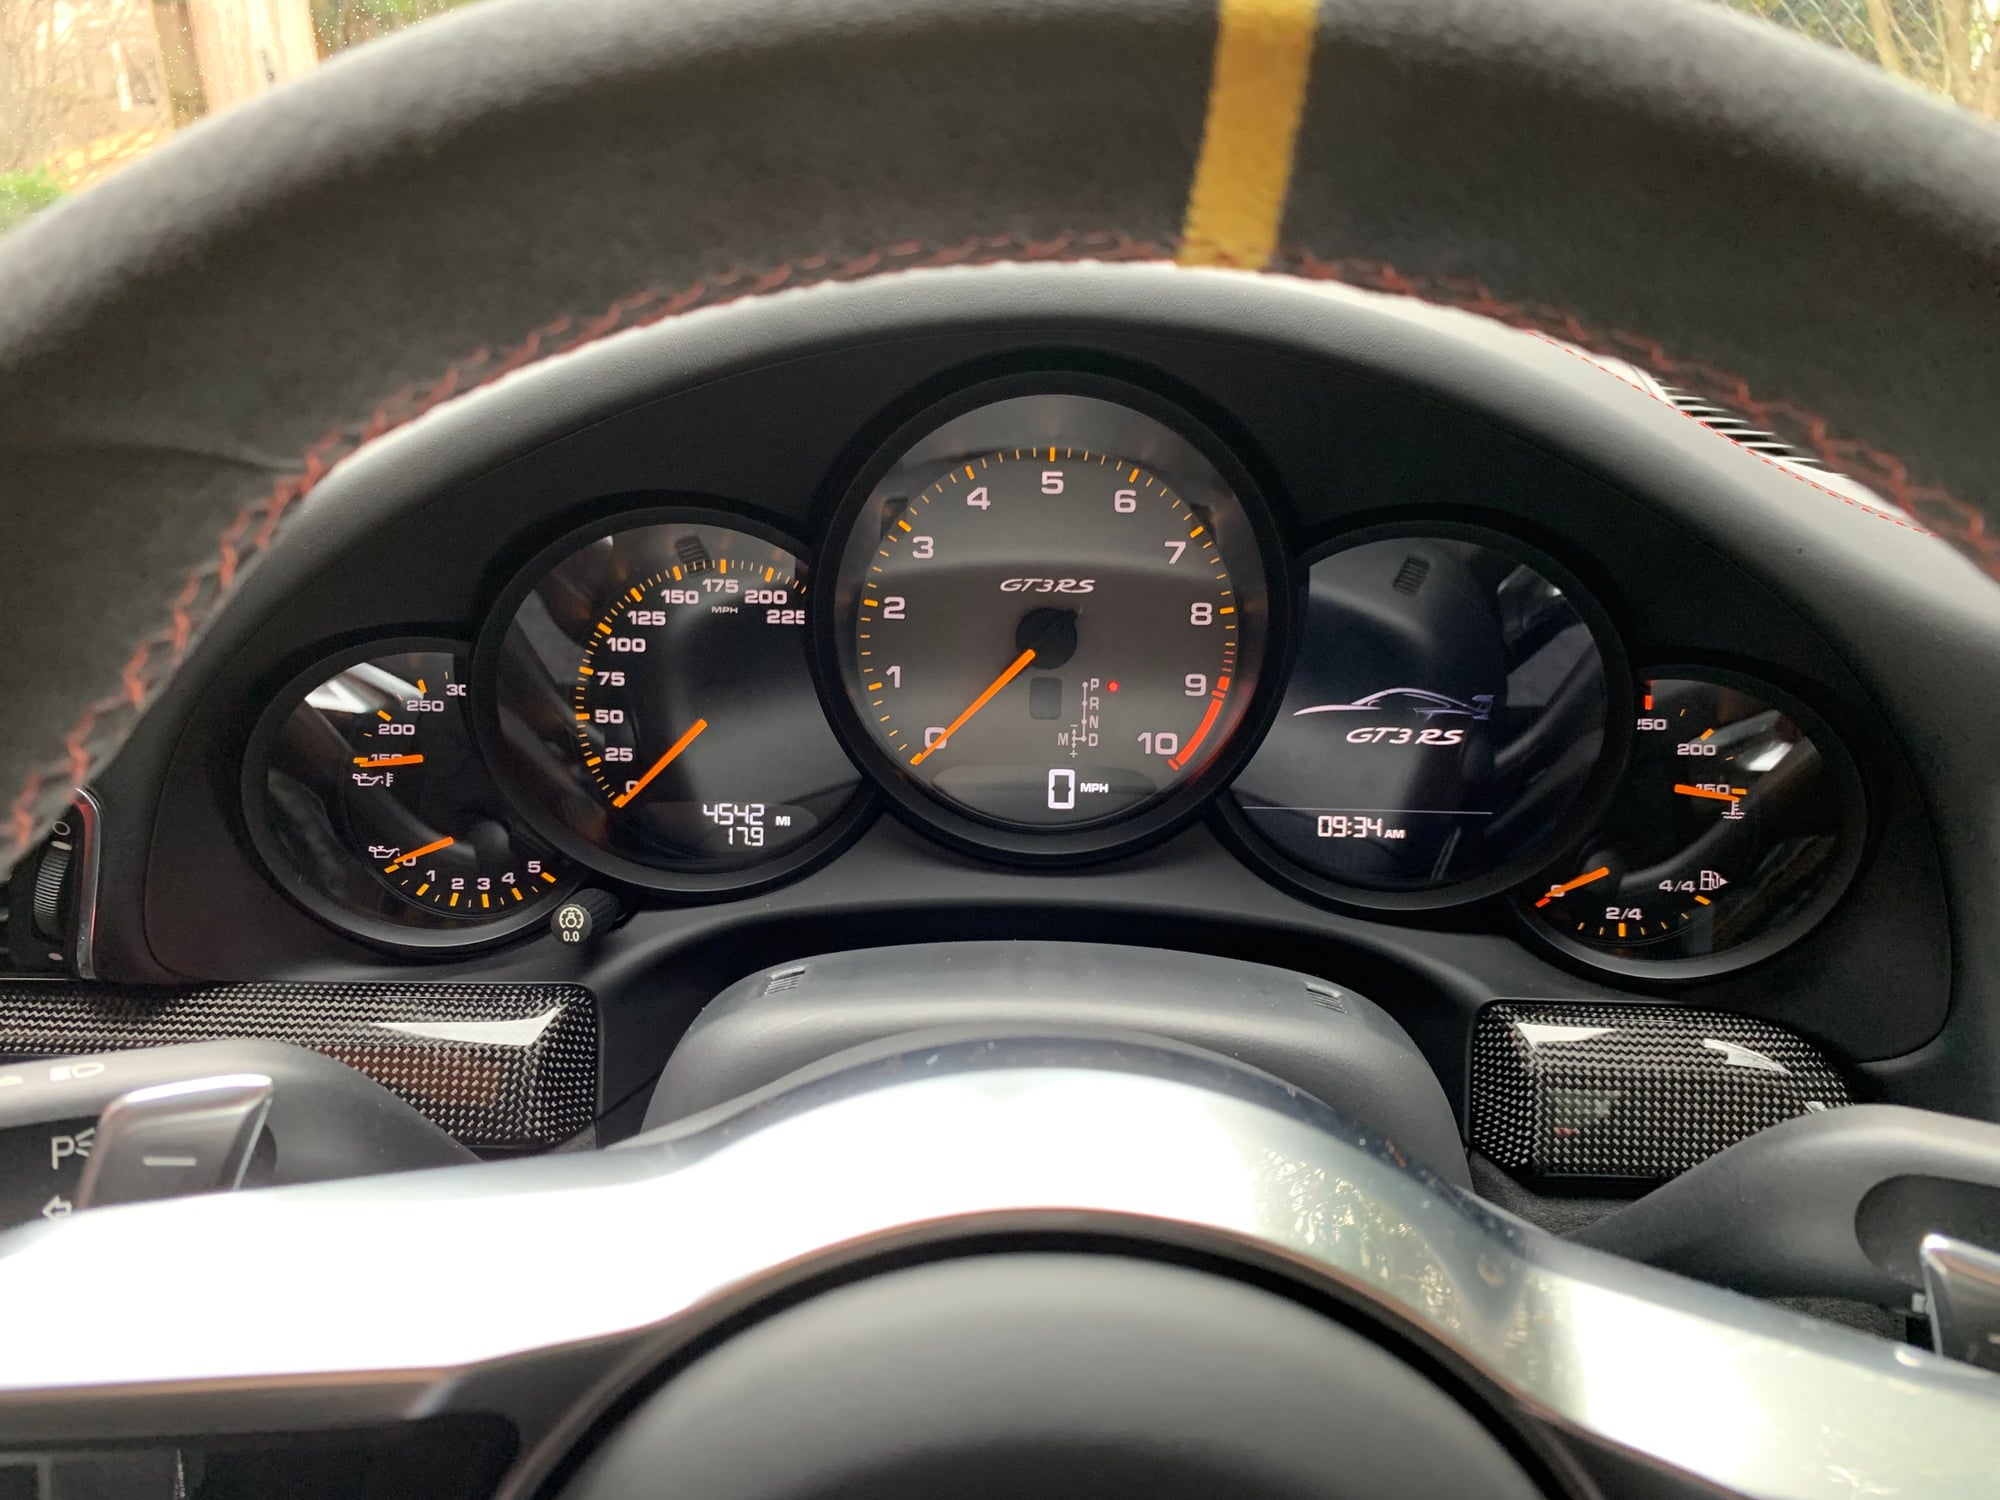 2016 Porsche GT3 - 2016 GT3 RS lava orange - Used - VIN WP0AF2A92GS192127 - 4,542 Miles - 6 cyl - 2WD - Automatic - Coupe - Orange - Atlanta, GA 30342, United States